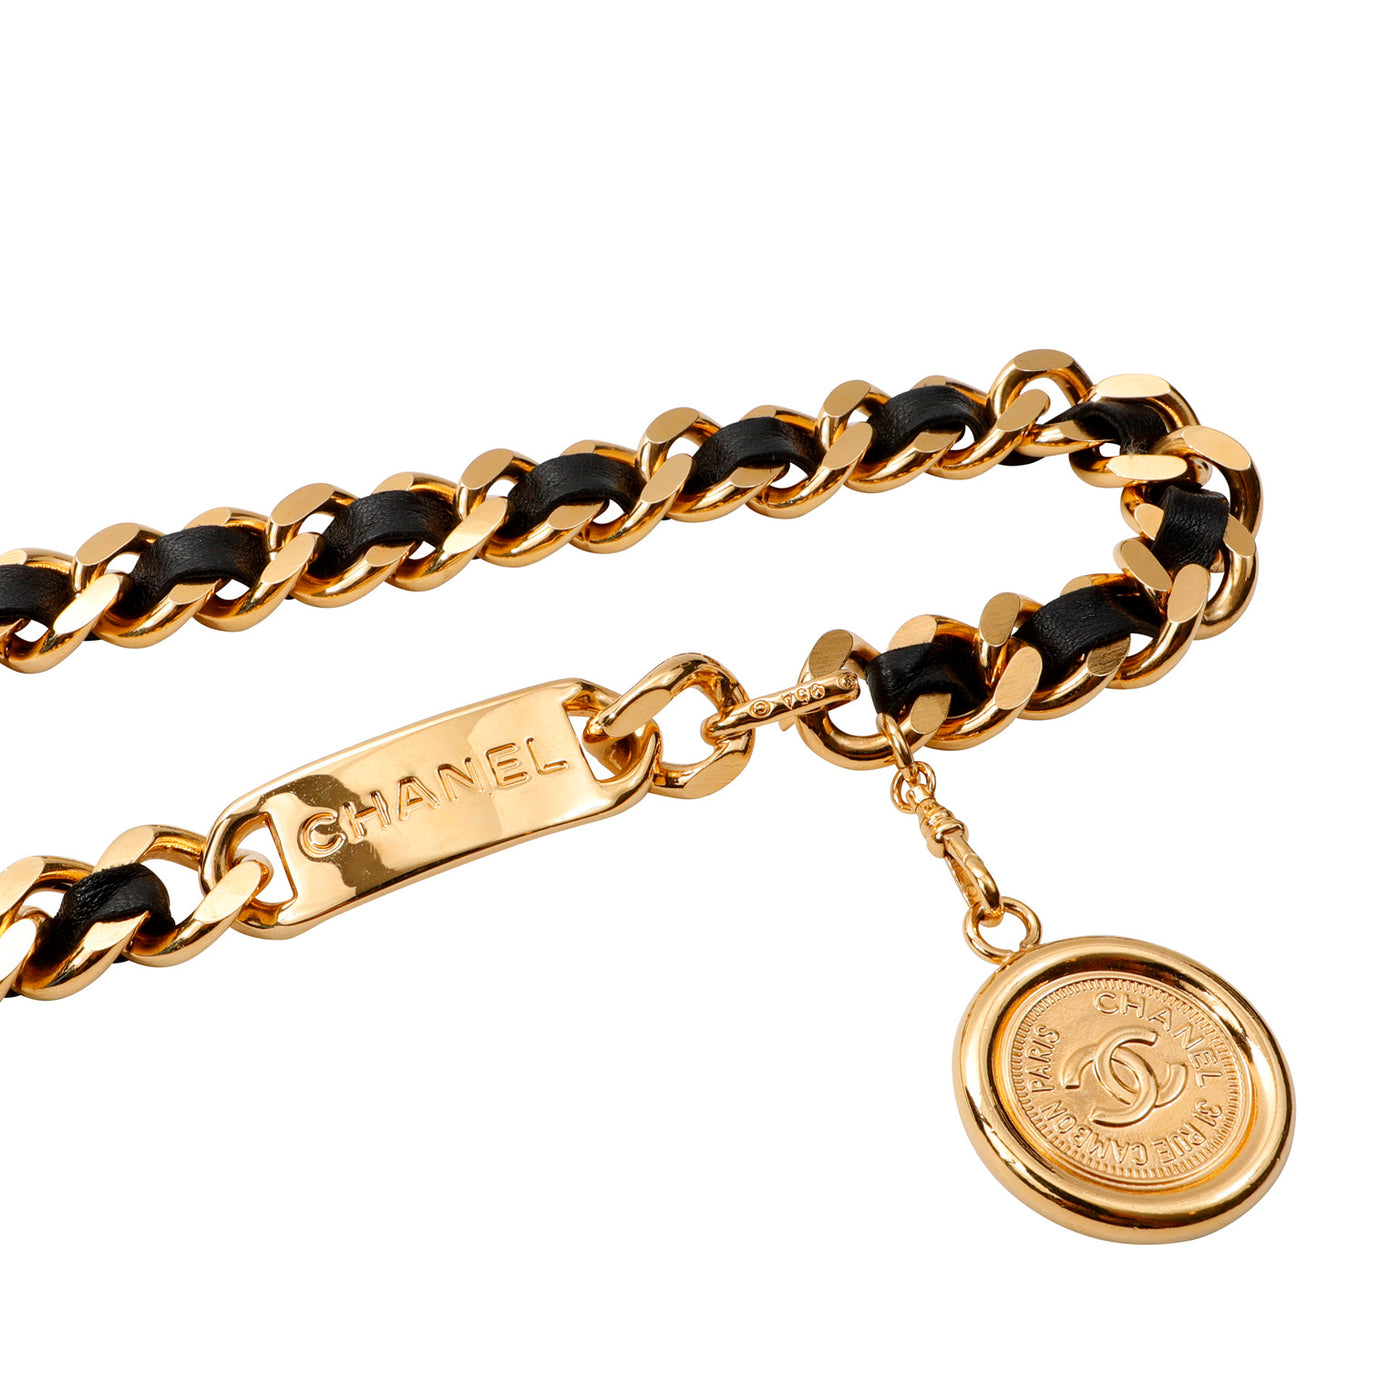 Chanel Black Chain Belt w/ Gold CC Charm